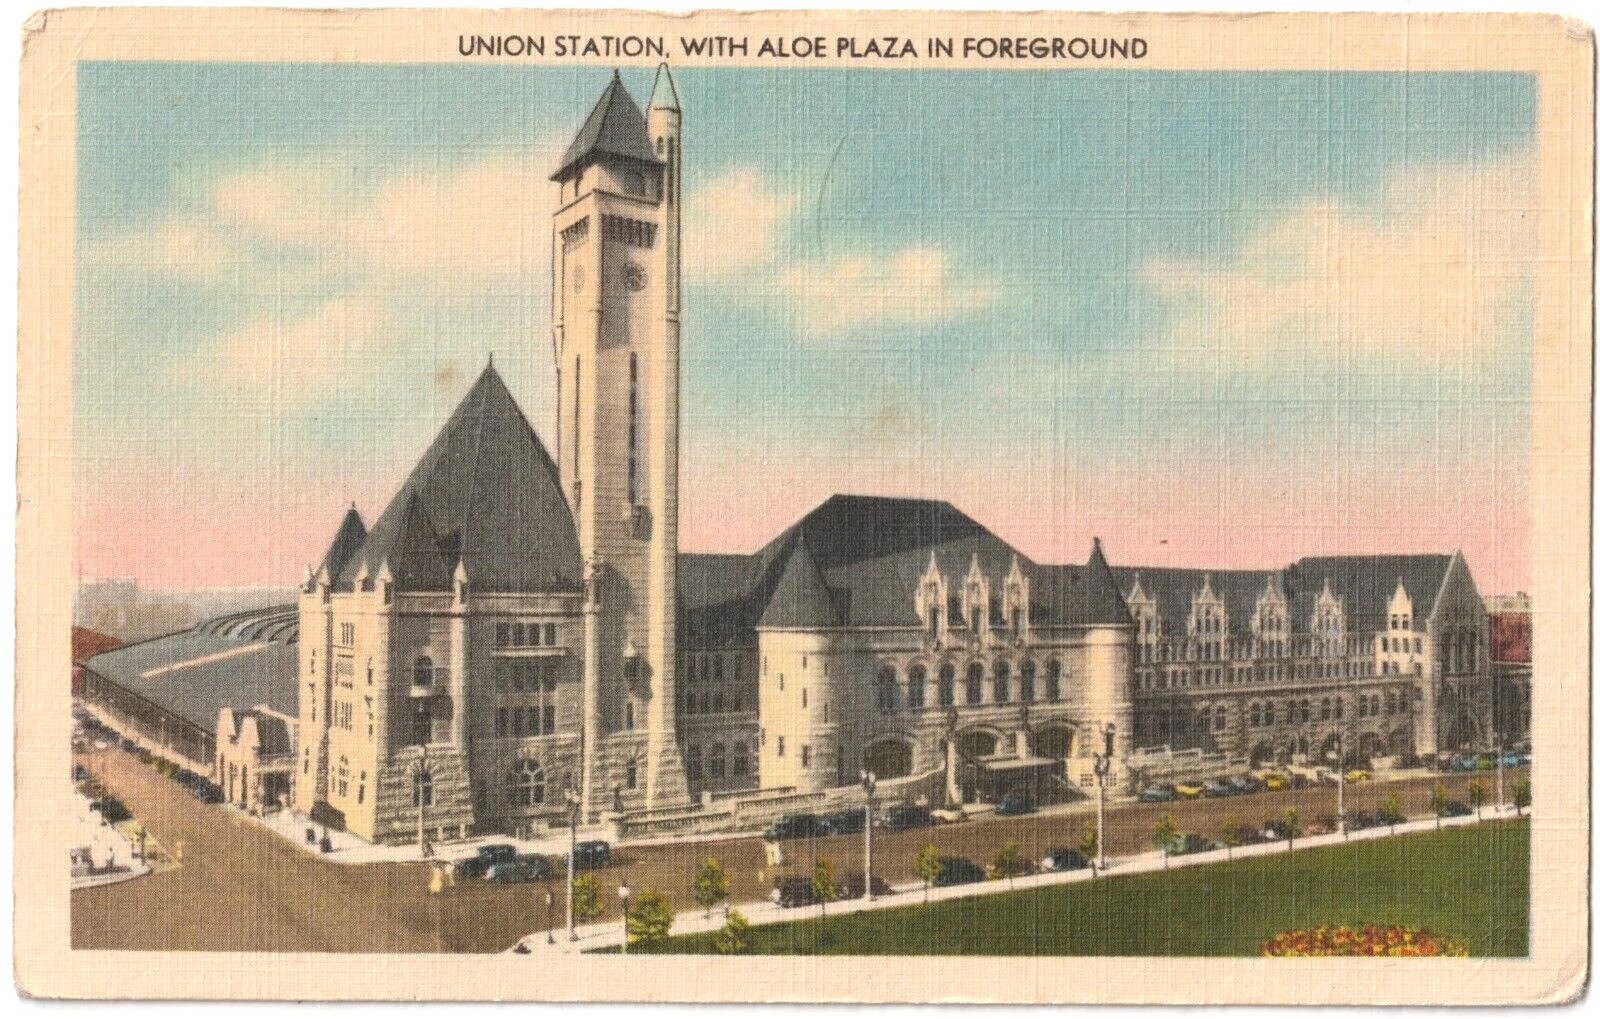 Union Station with Aloe Plaza-St. Louis, Missouri MO-vintage postcard